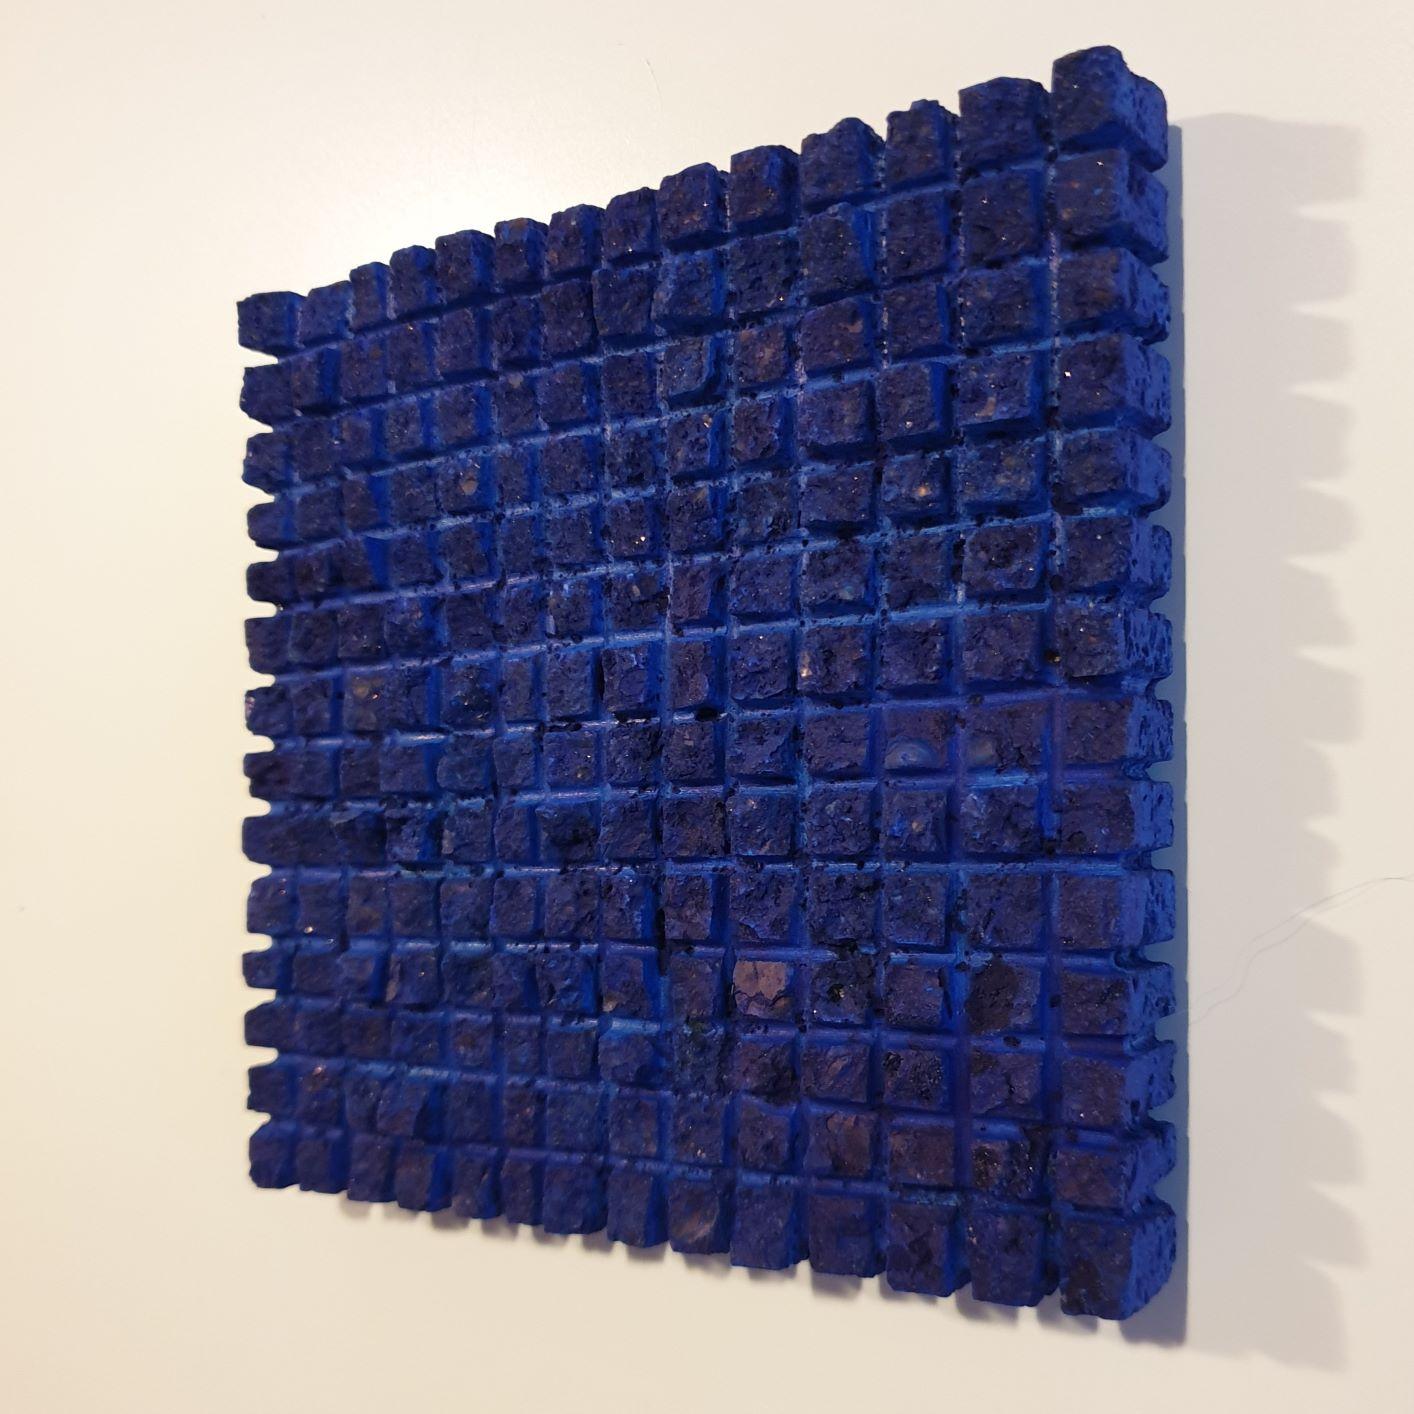 o.T. (Bl15SqS) - blue contemporary modern wall sculpture painting relief - Blue Abstract Sculpture by Dieter Kränzlein